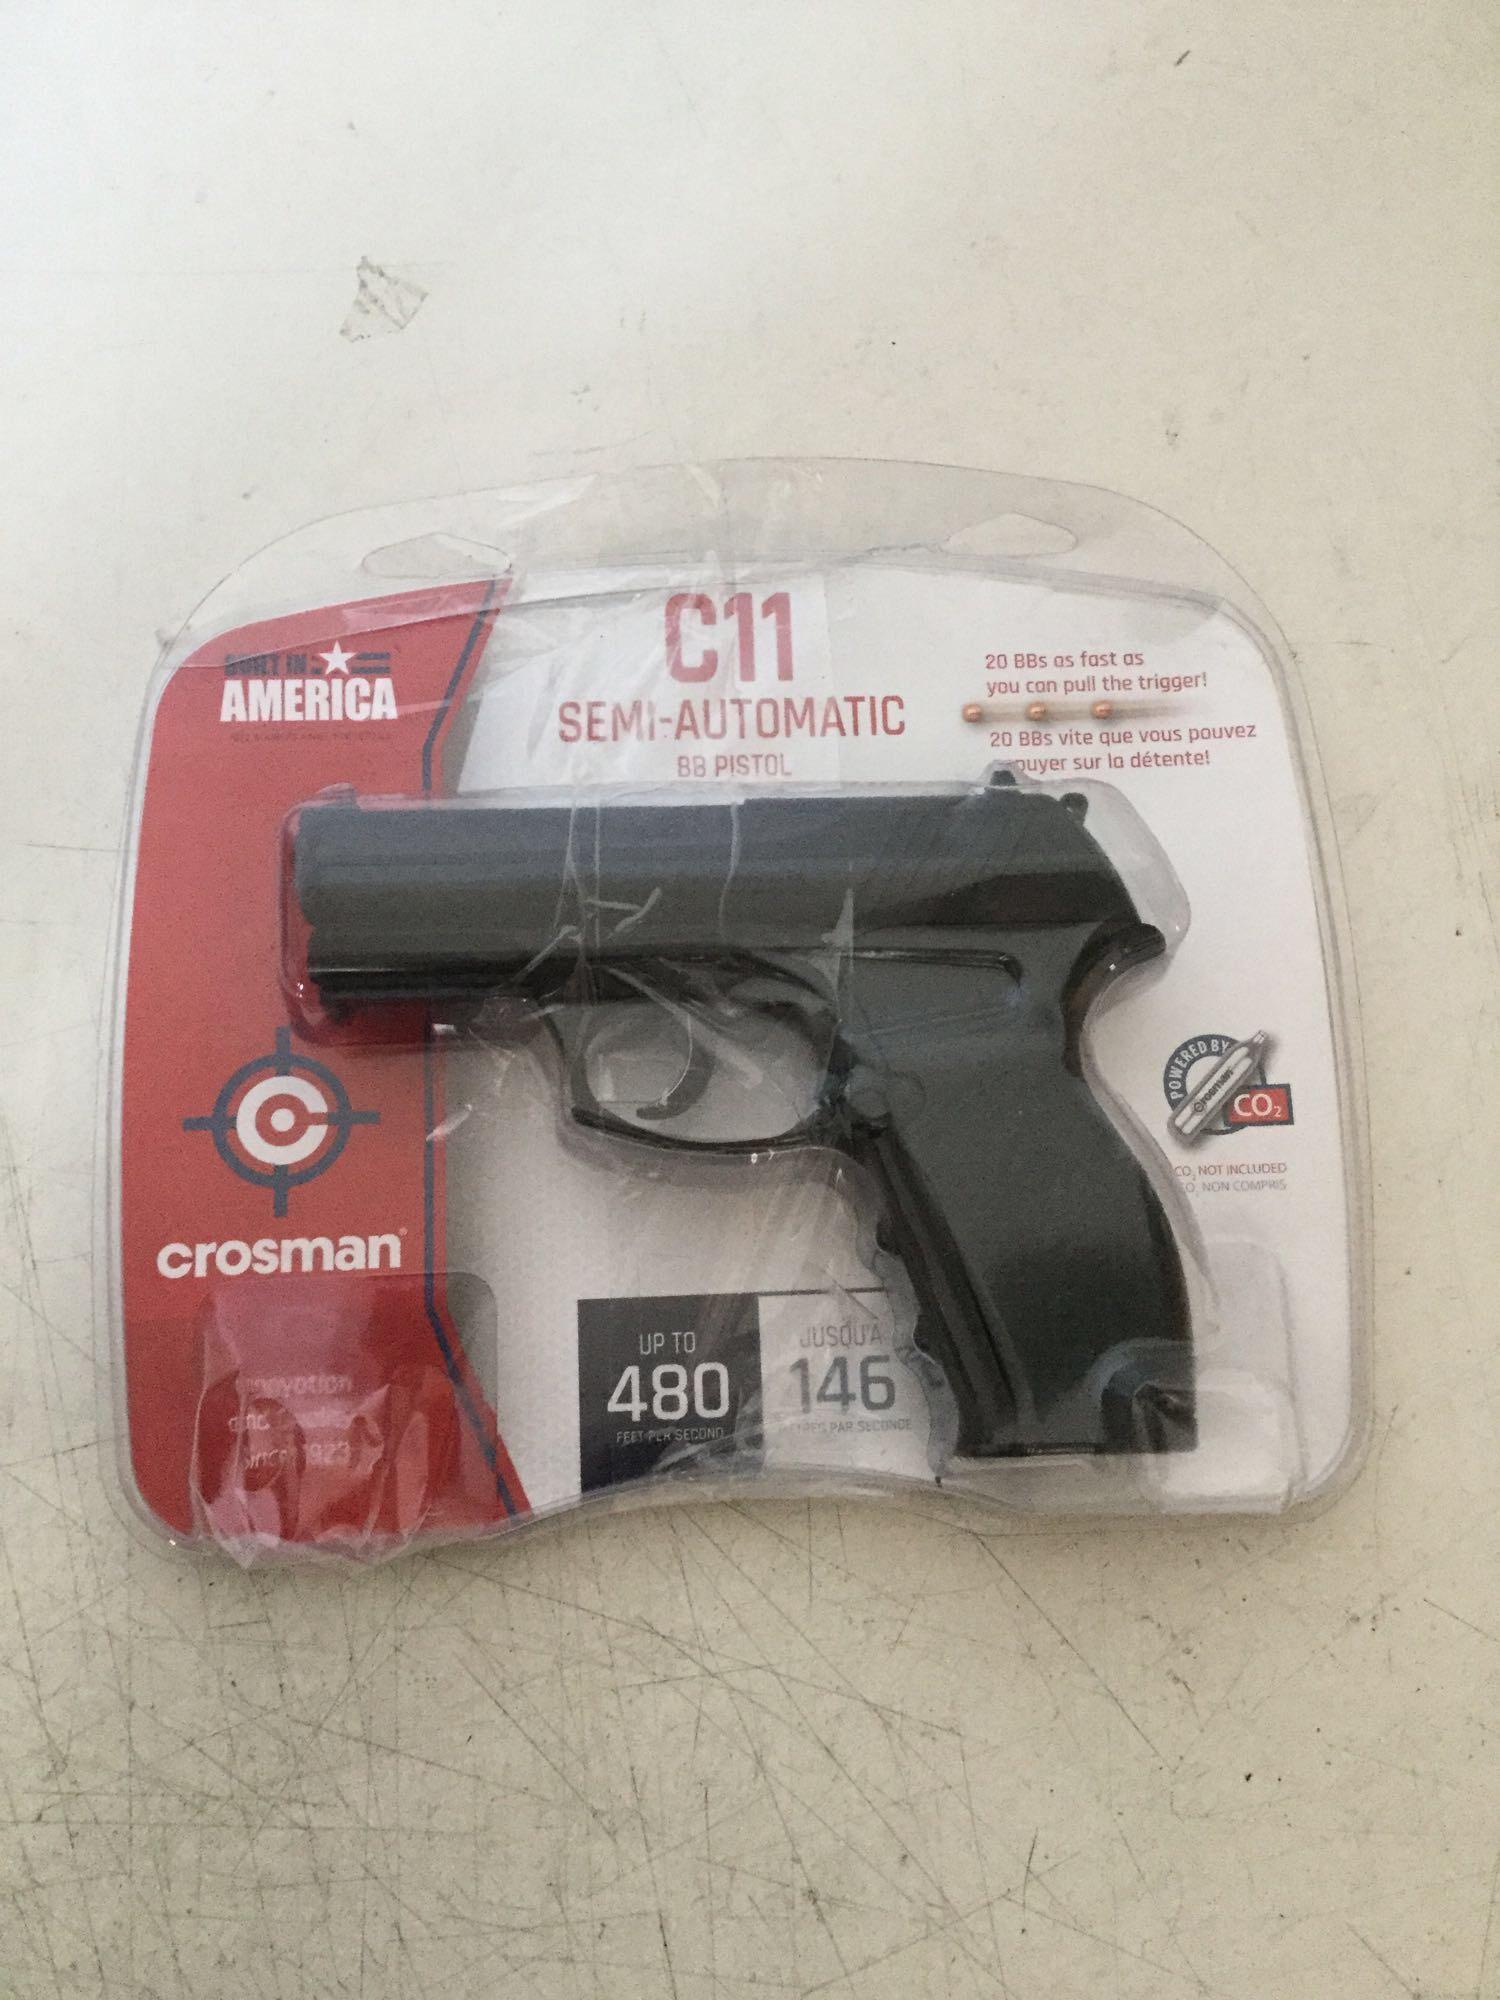 Crosman C11 Semi-Automatic BB CO2 Pistol -$64.99 MSRP